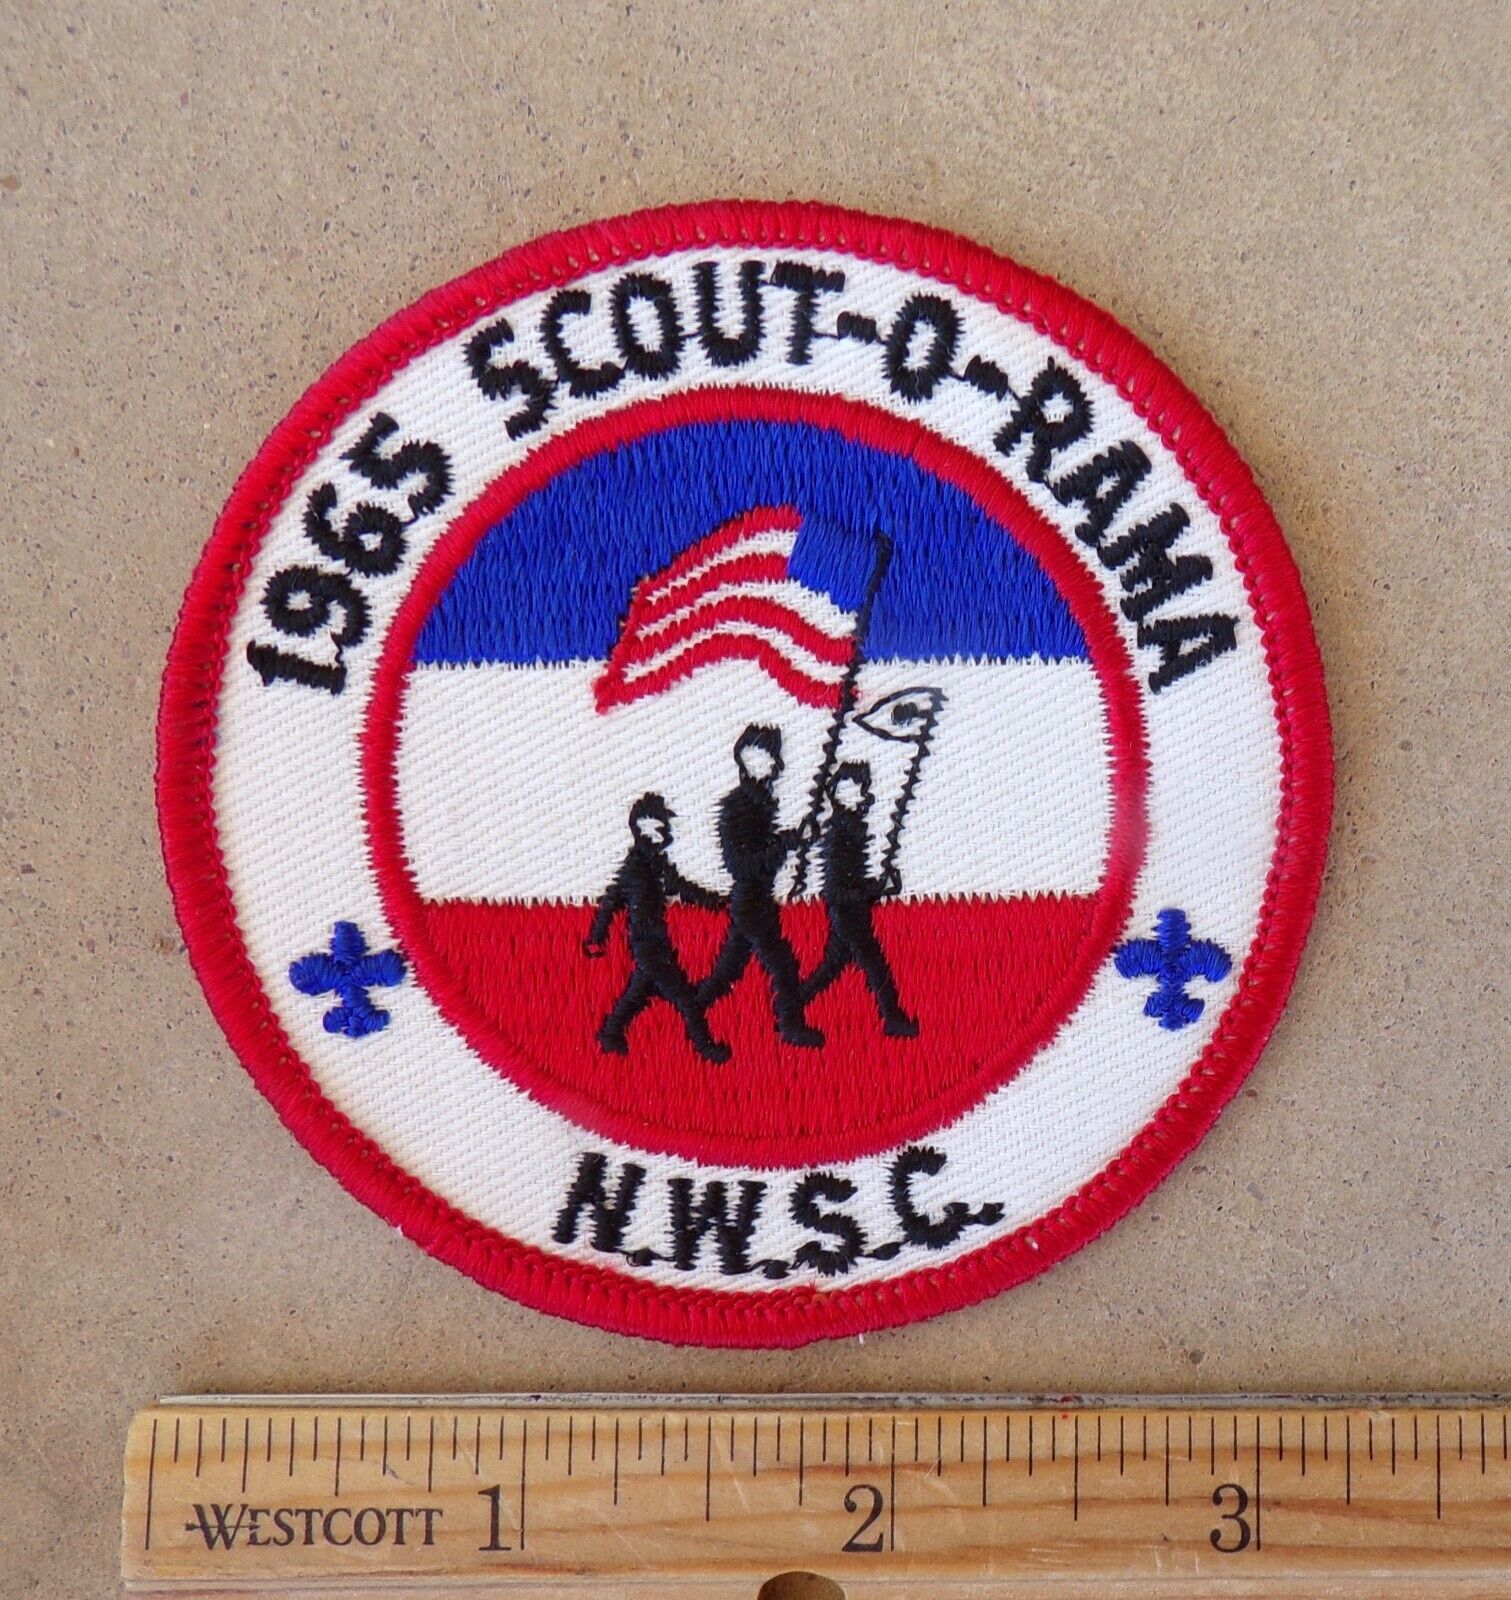 Vintage 1965 Boy Scouts of America patch SCOUT-O-RAMA, NWSC